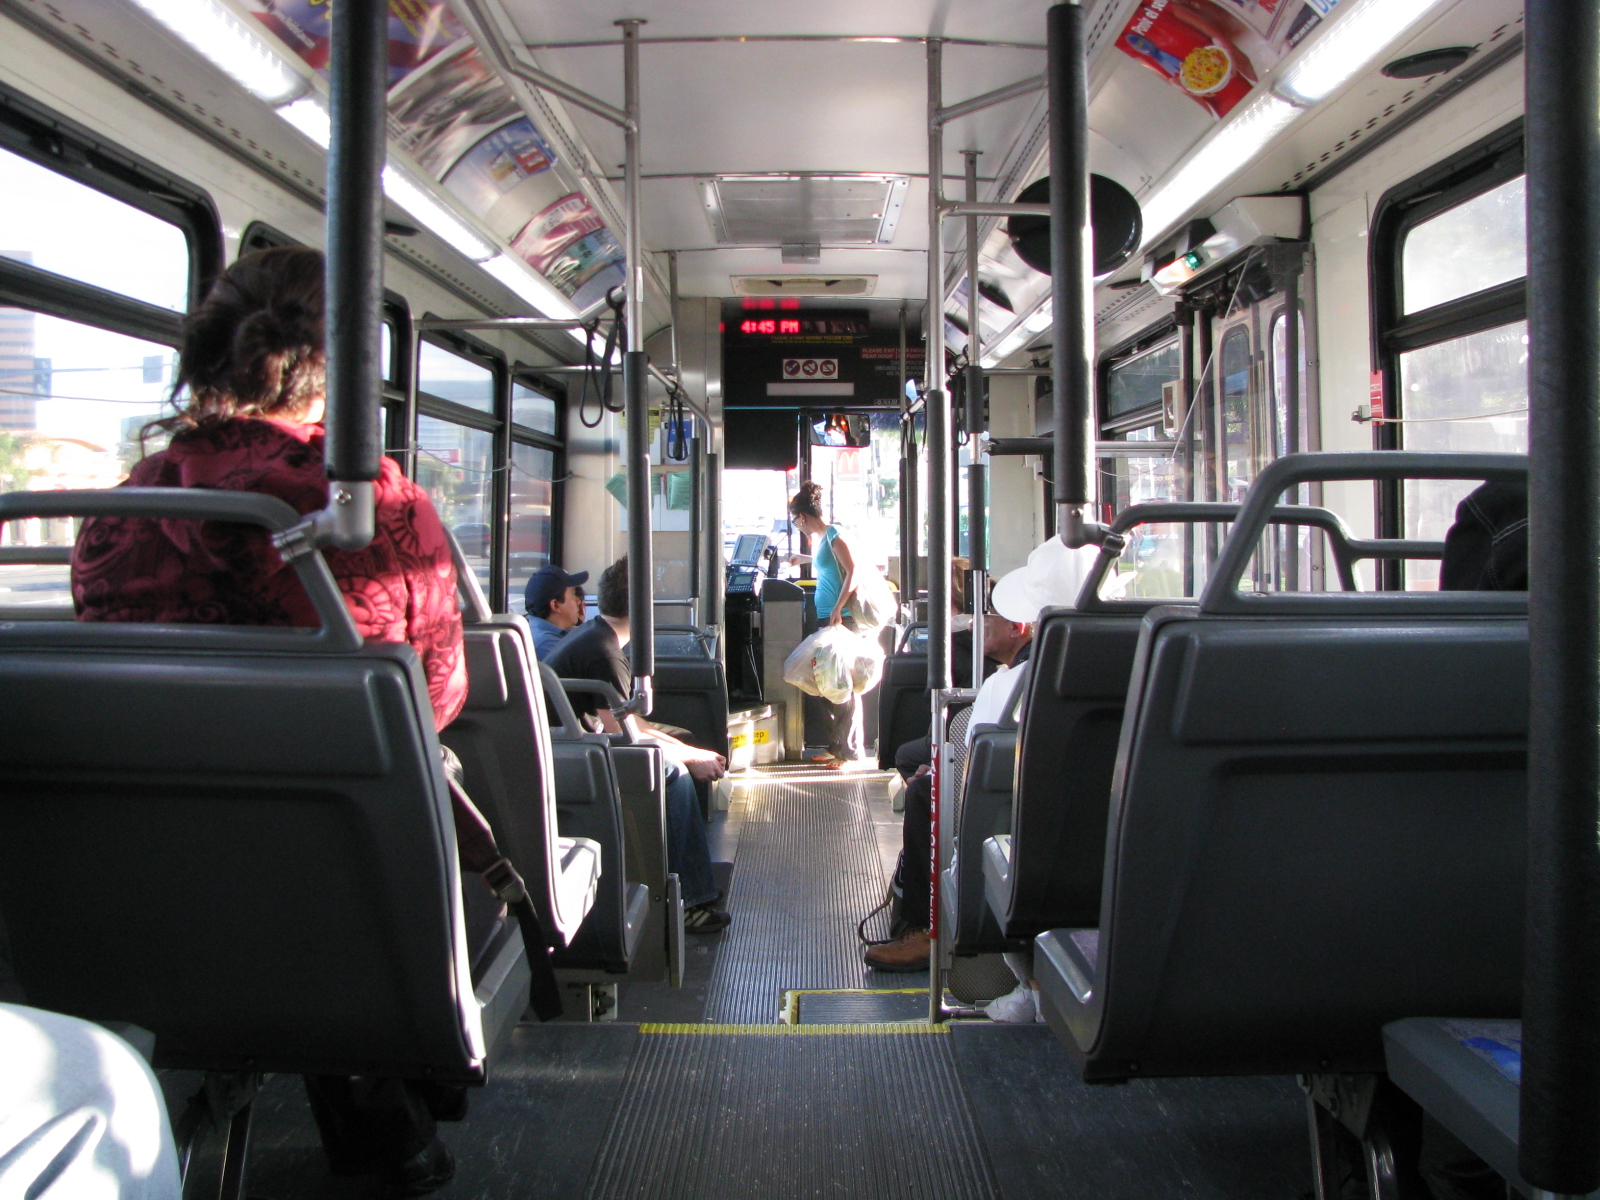 File:OCTA Bus View 01.jpg - Wikimedia Commons